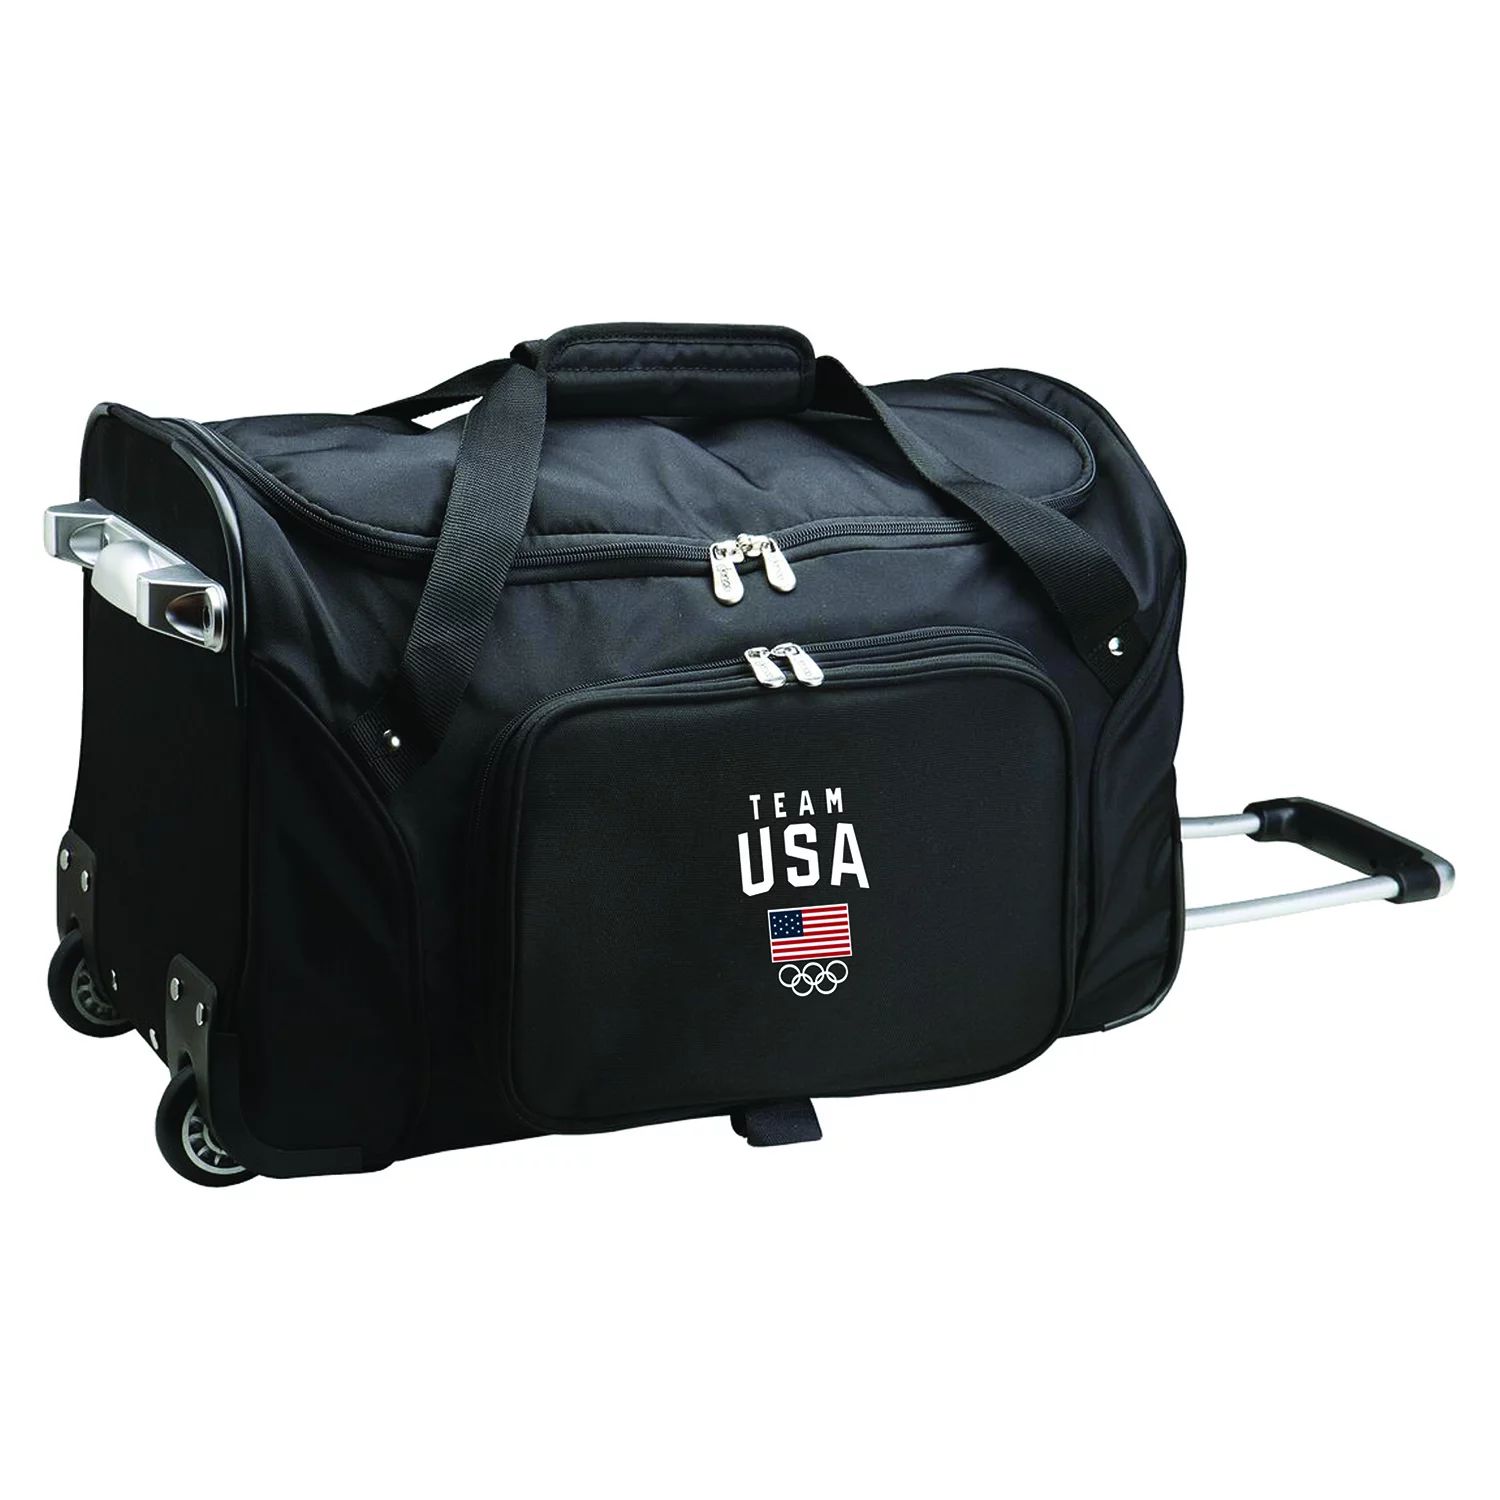 цена Спортивная сумка Denco на колесиках для олимпийской сборной США, 21 дюйм Denco